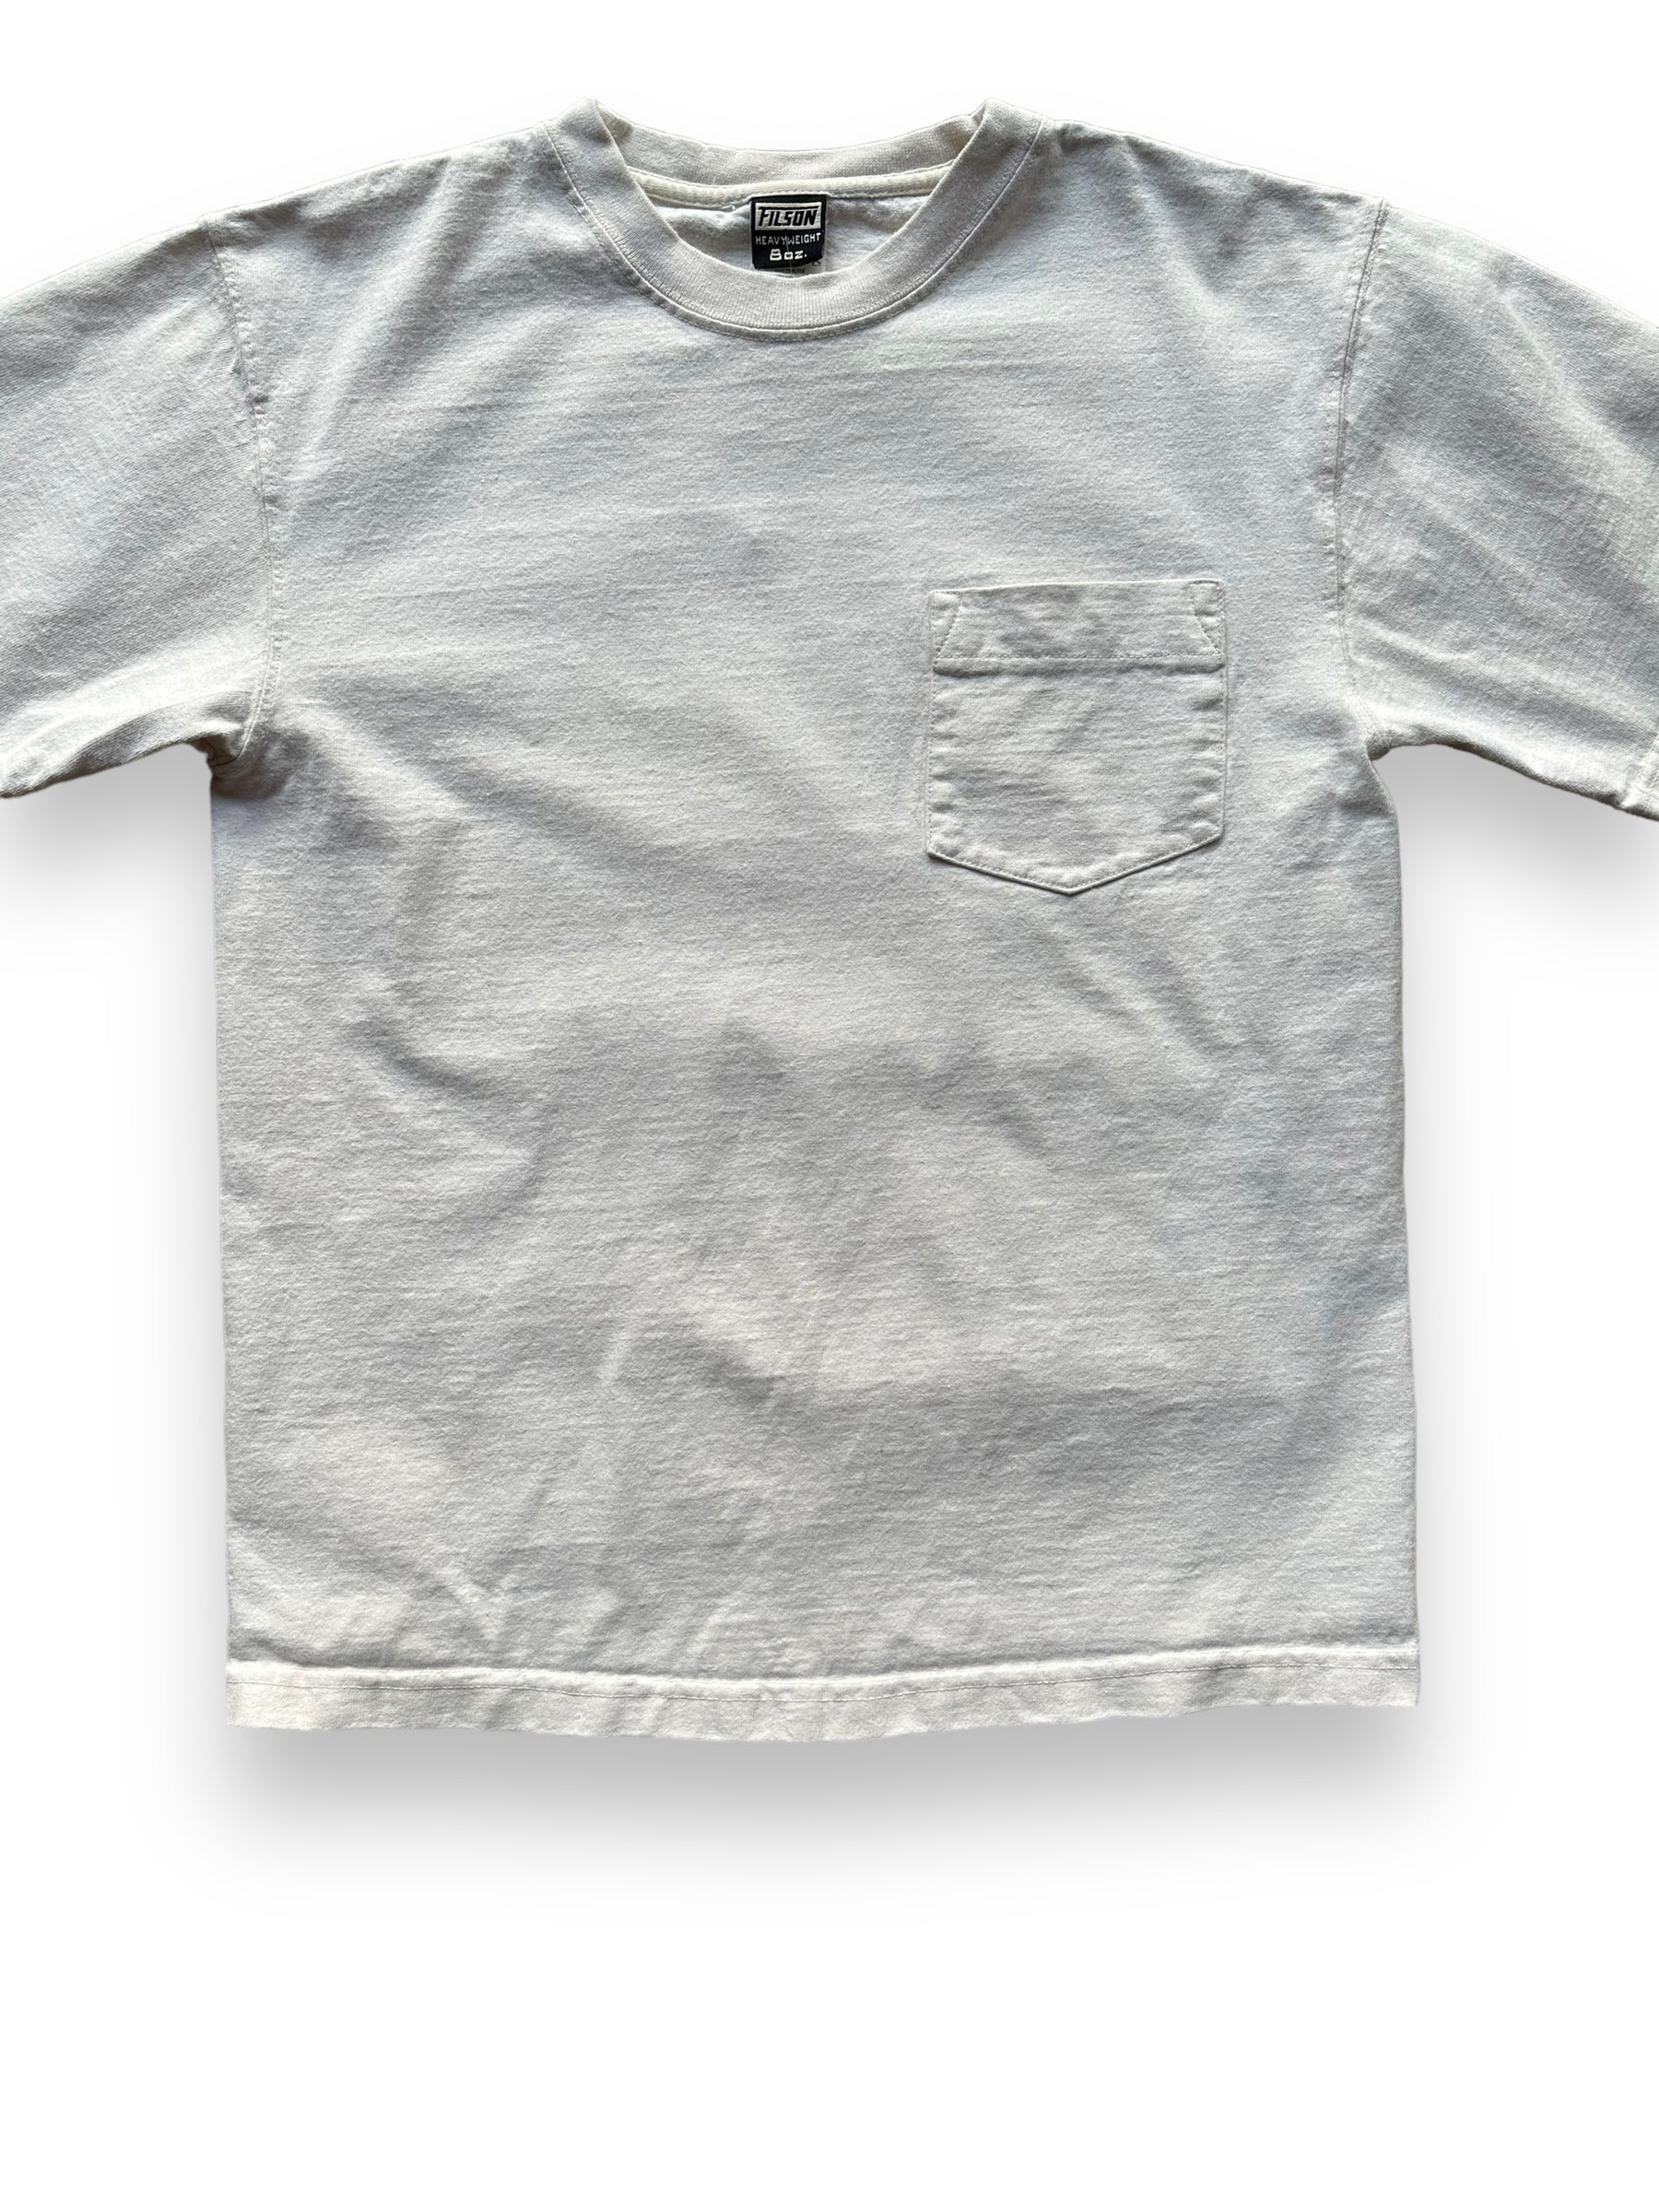 Front Detail on White Filson Loopwheel Heavyweight Cotton Pocket Tee SZ M |  Barn Owl Vintage Goods | Vintage Filson Workwear Seattle